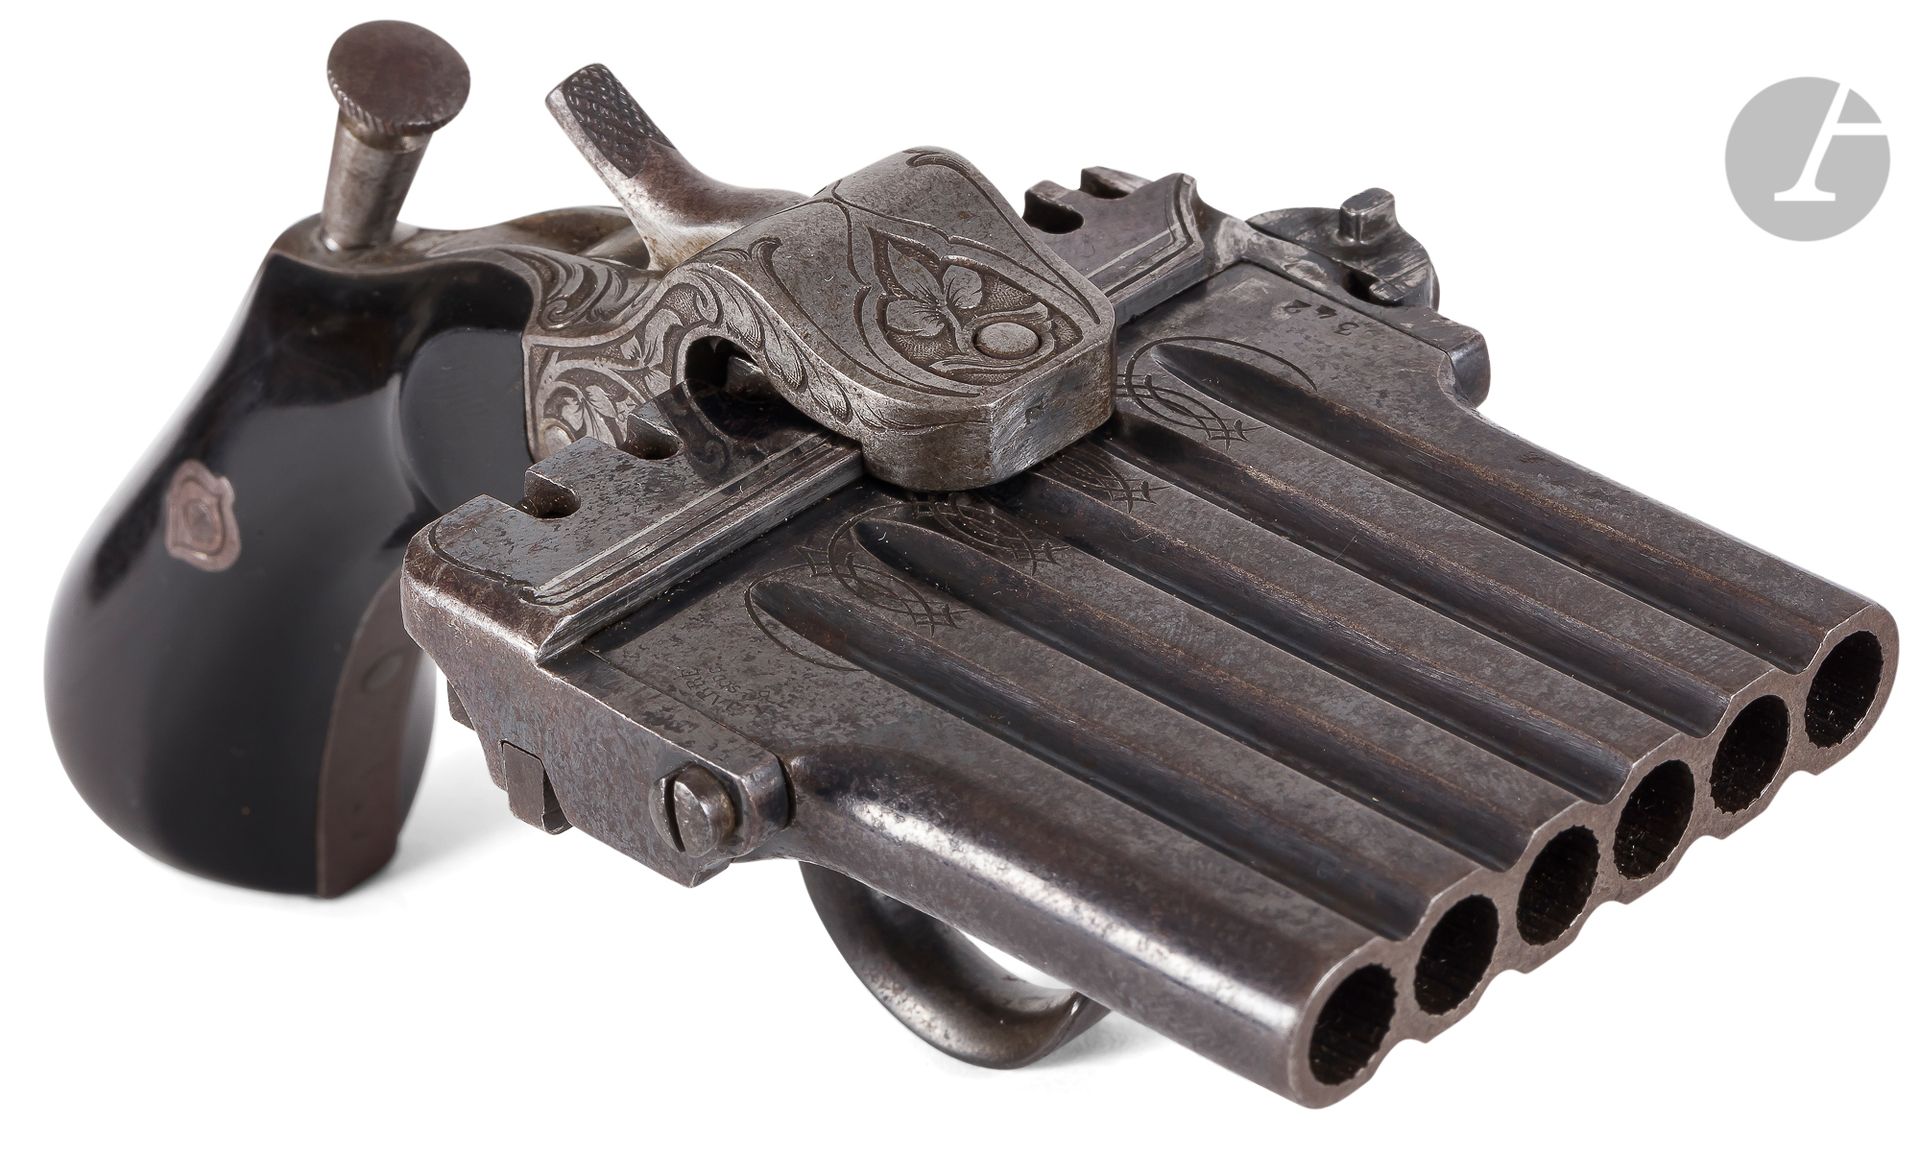 Null 带有 "Jarre "系统的手枪，带有销子，属于

第1式DIT "活塞式哈姆雷特"，6支枪，口径7毫米

一排六根枪管，镂空，发蓝，印有 "A.JA&hellip;